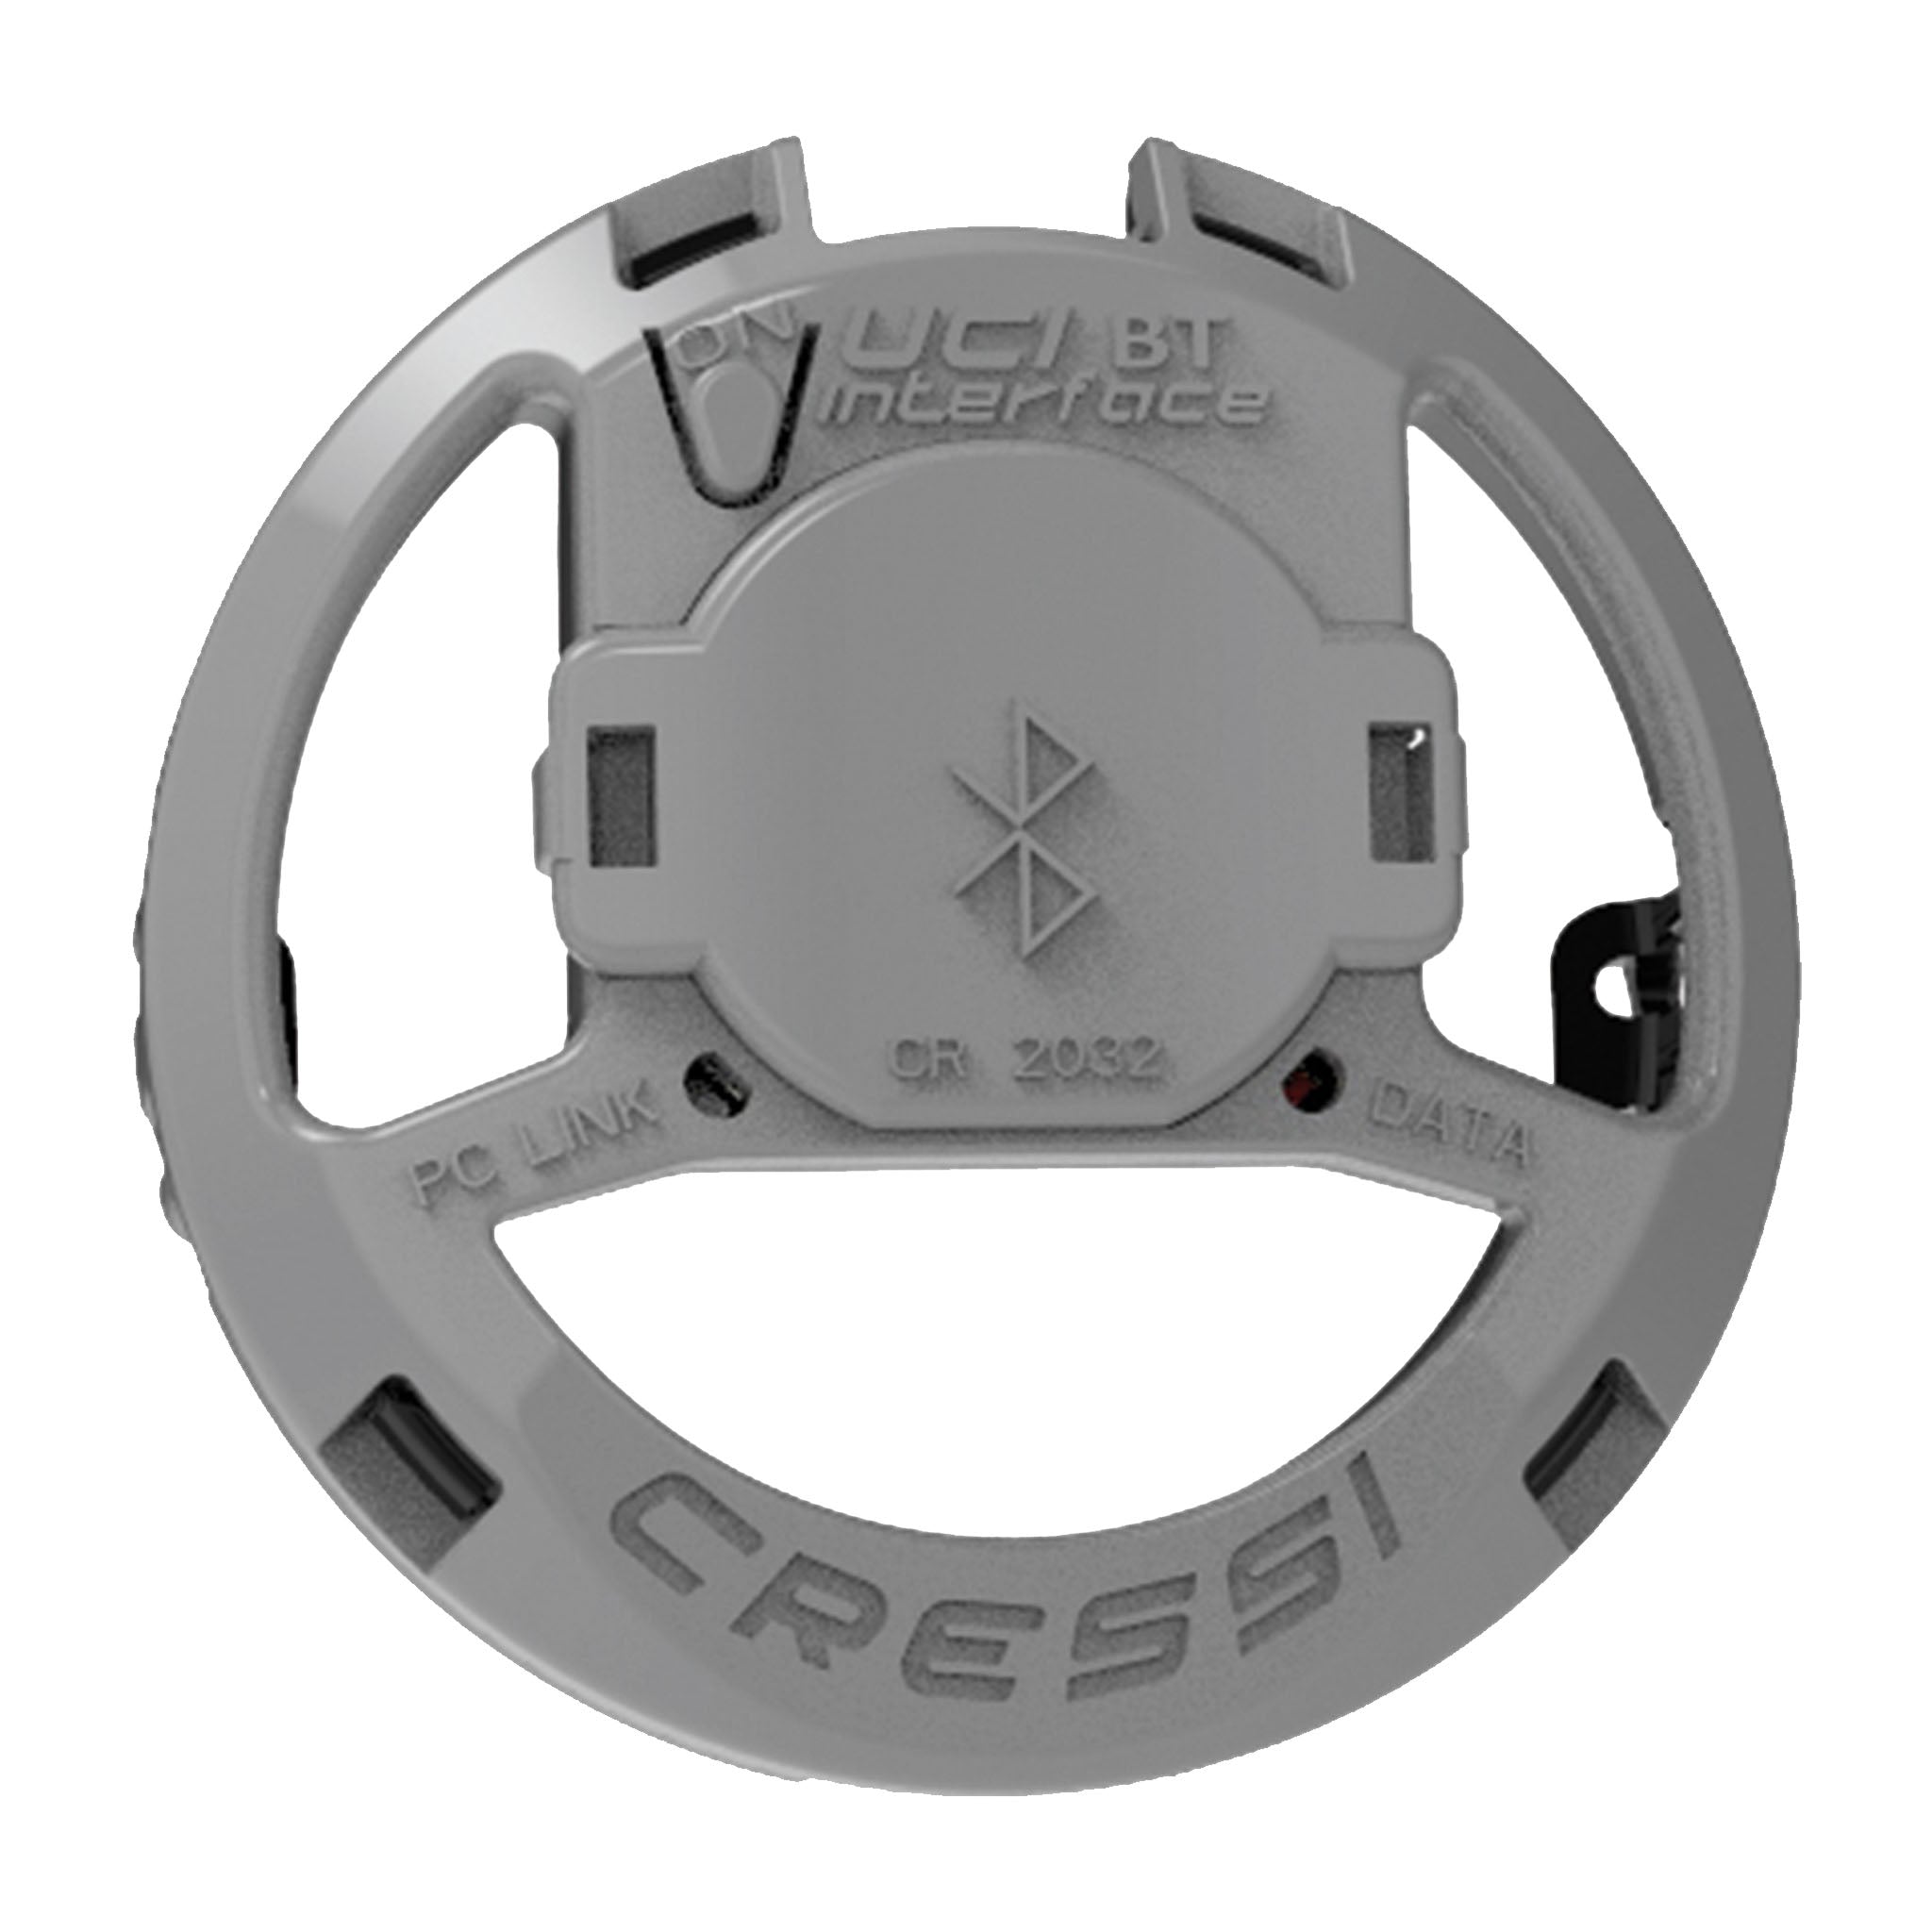 Cressi Goa, Neon, Cartesio - Bluetooth Dive Computer Interface 